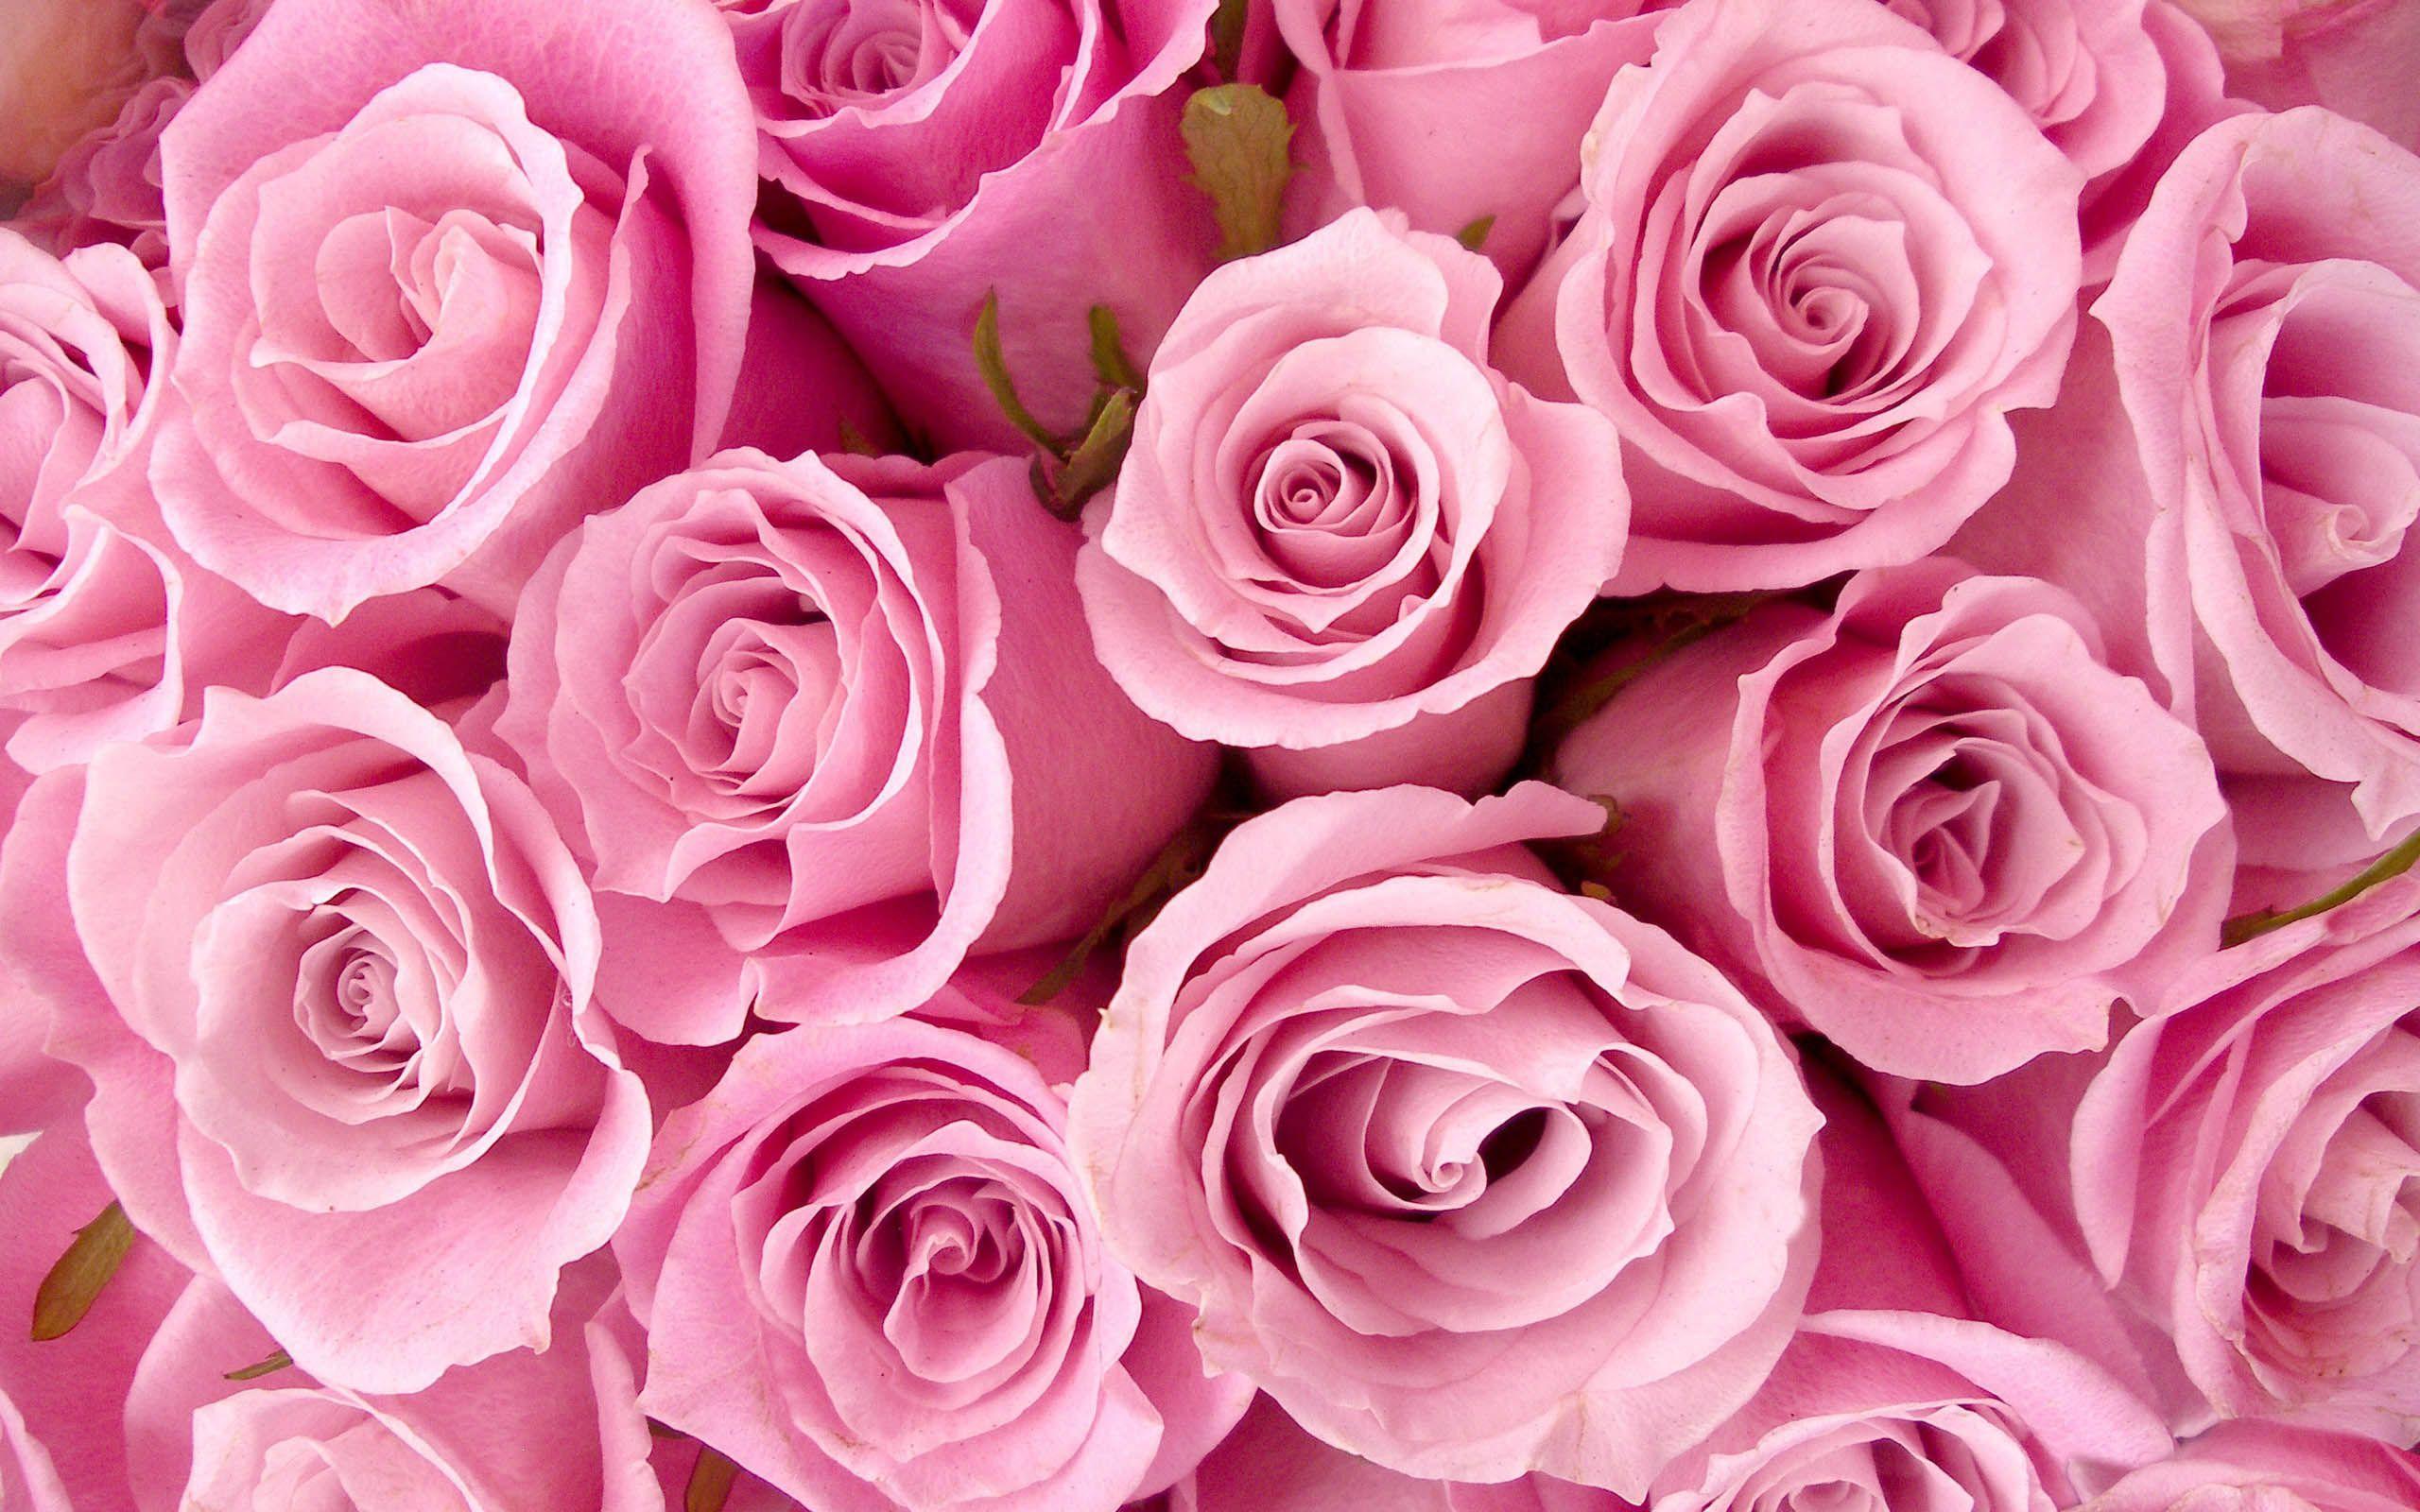 Special Pink Roses Wallpaper Rose Full HD Pics Of Mobile